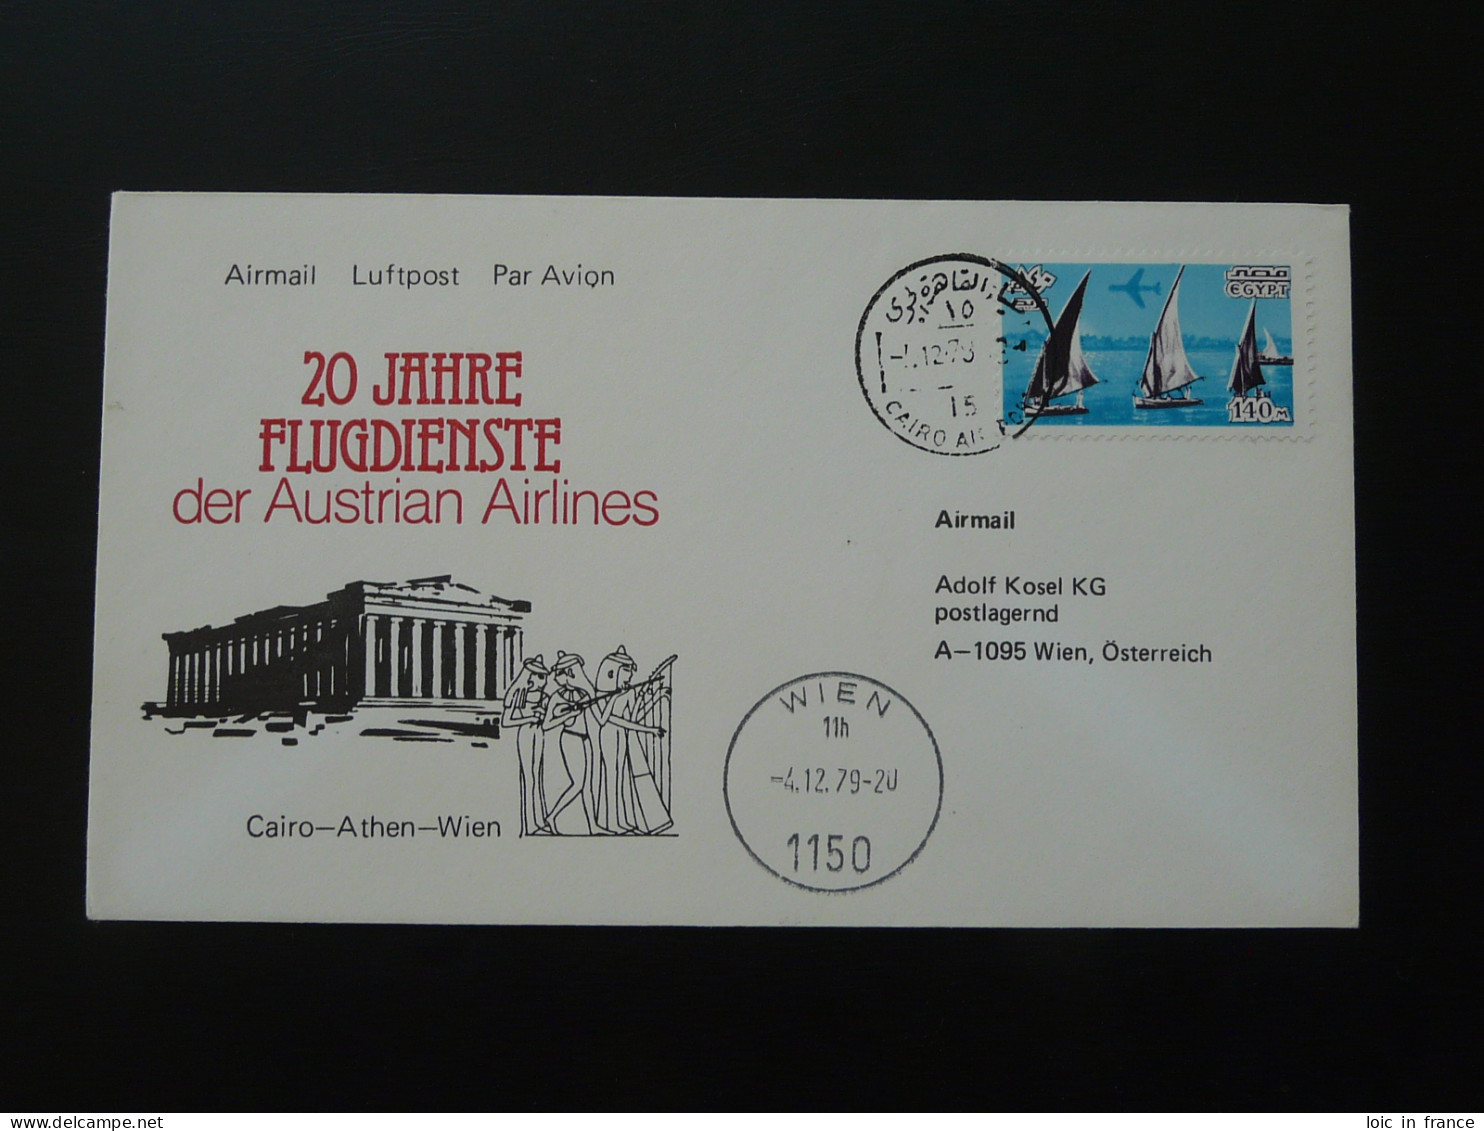 Lettre Vol Special Flight Cover Cairo Wien AUA Austrian Airlines 1979 - Briefe U. Dokumente